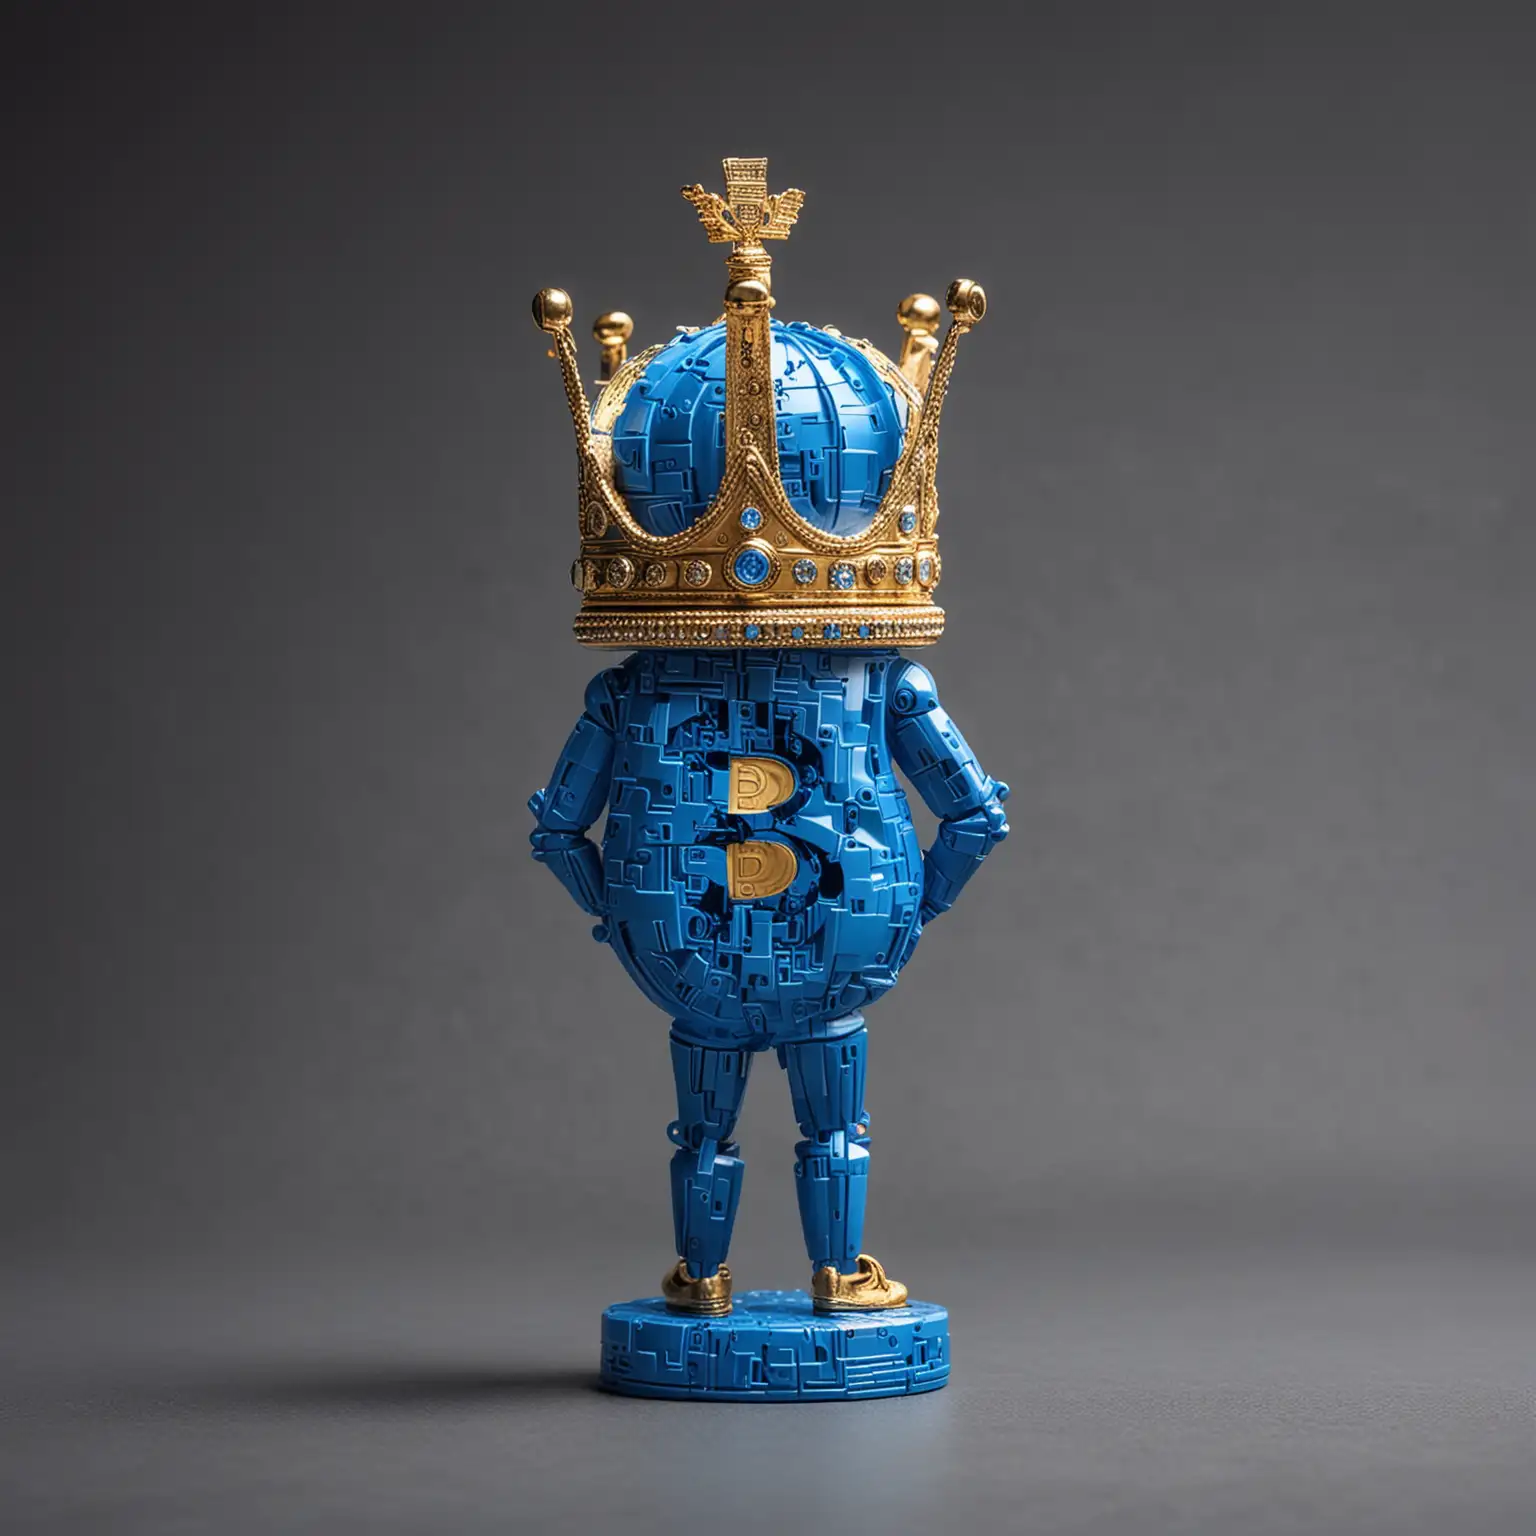 Regal Blue Bitcoin Figure with Crown on Flathead